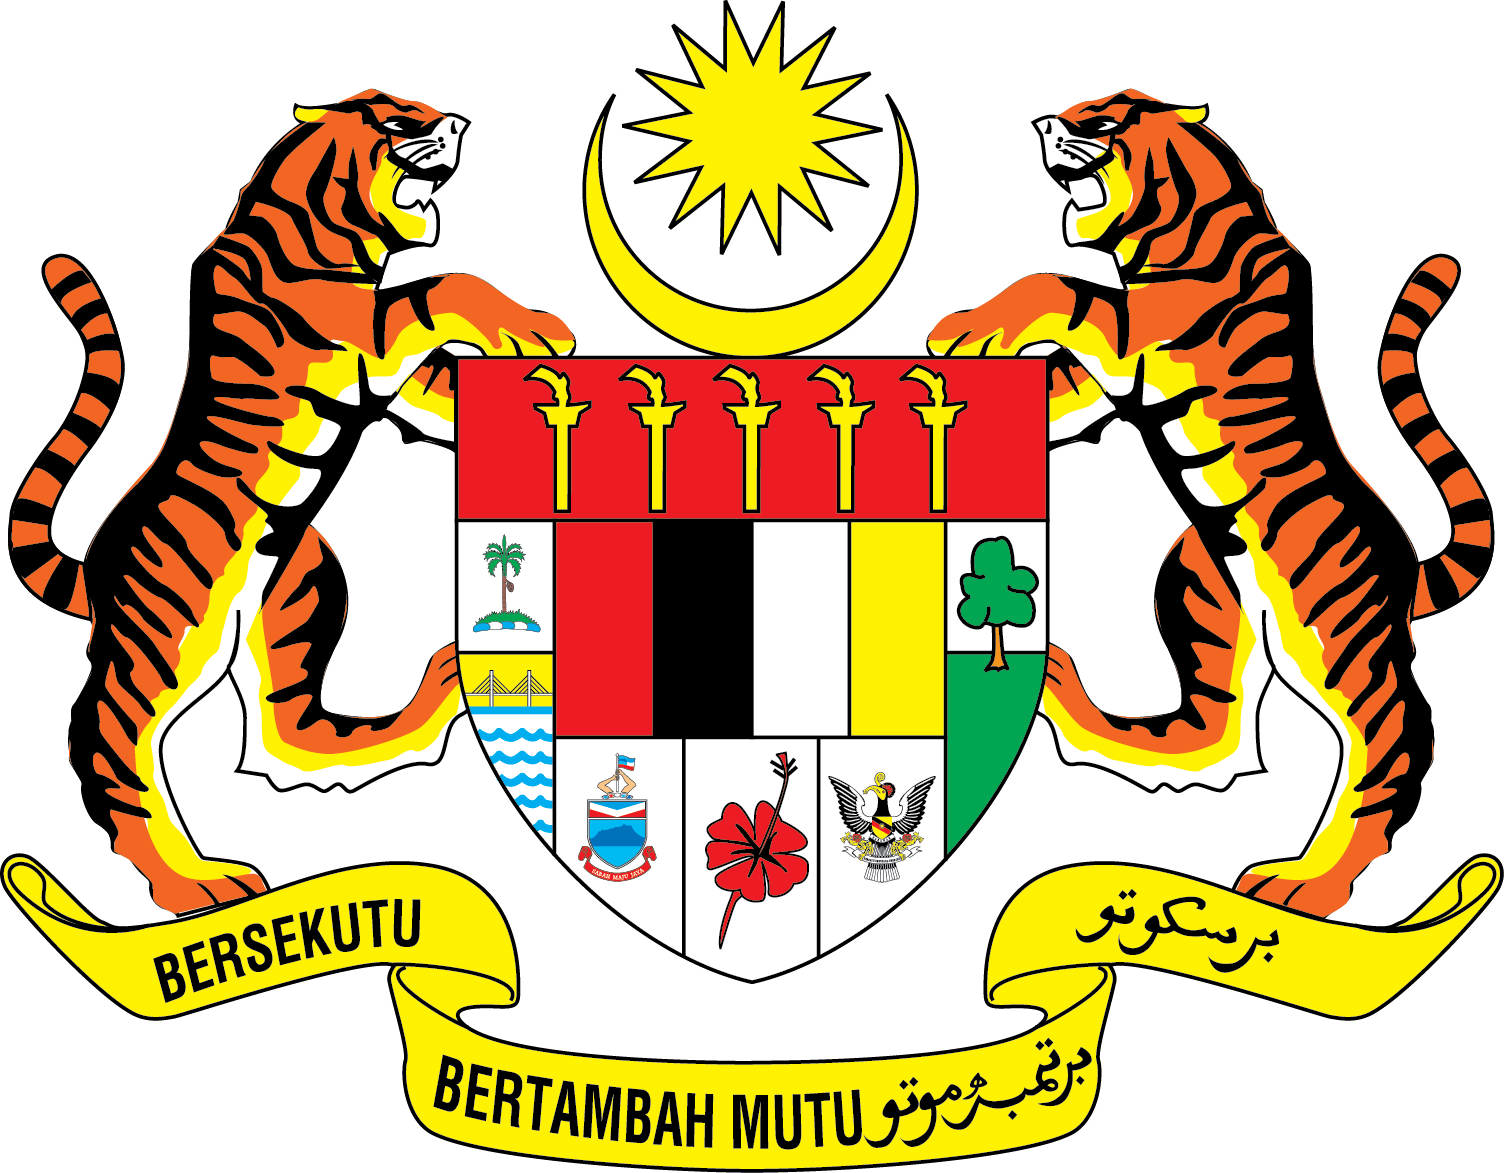 Suruhanjaya Perkhidmatan Awam Malaysia